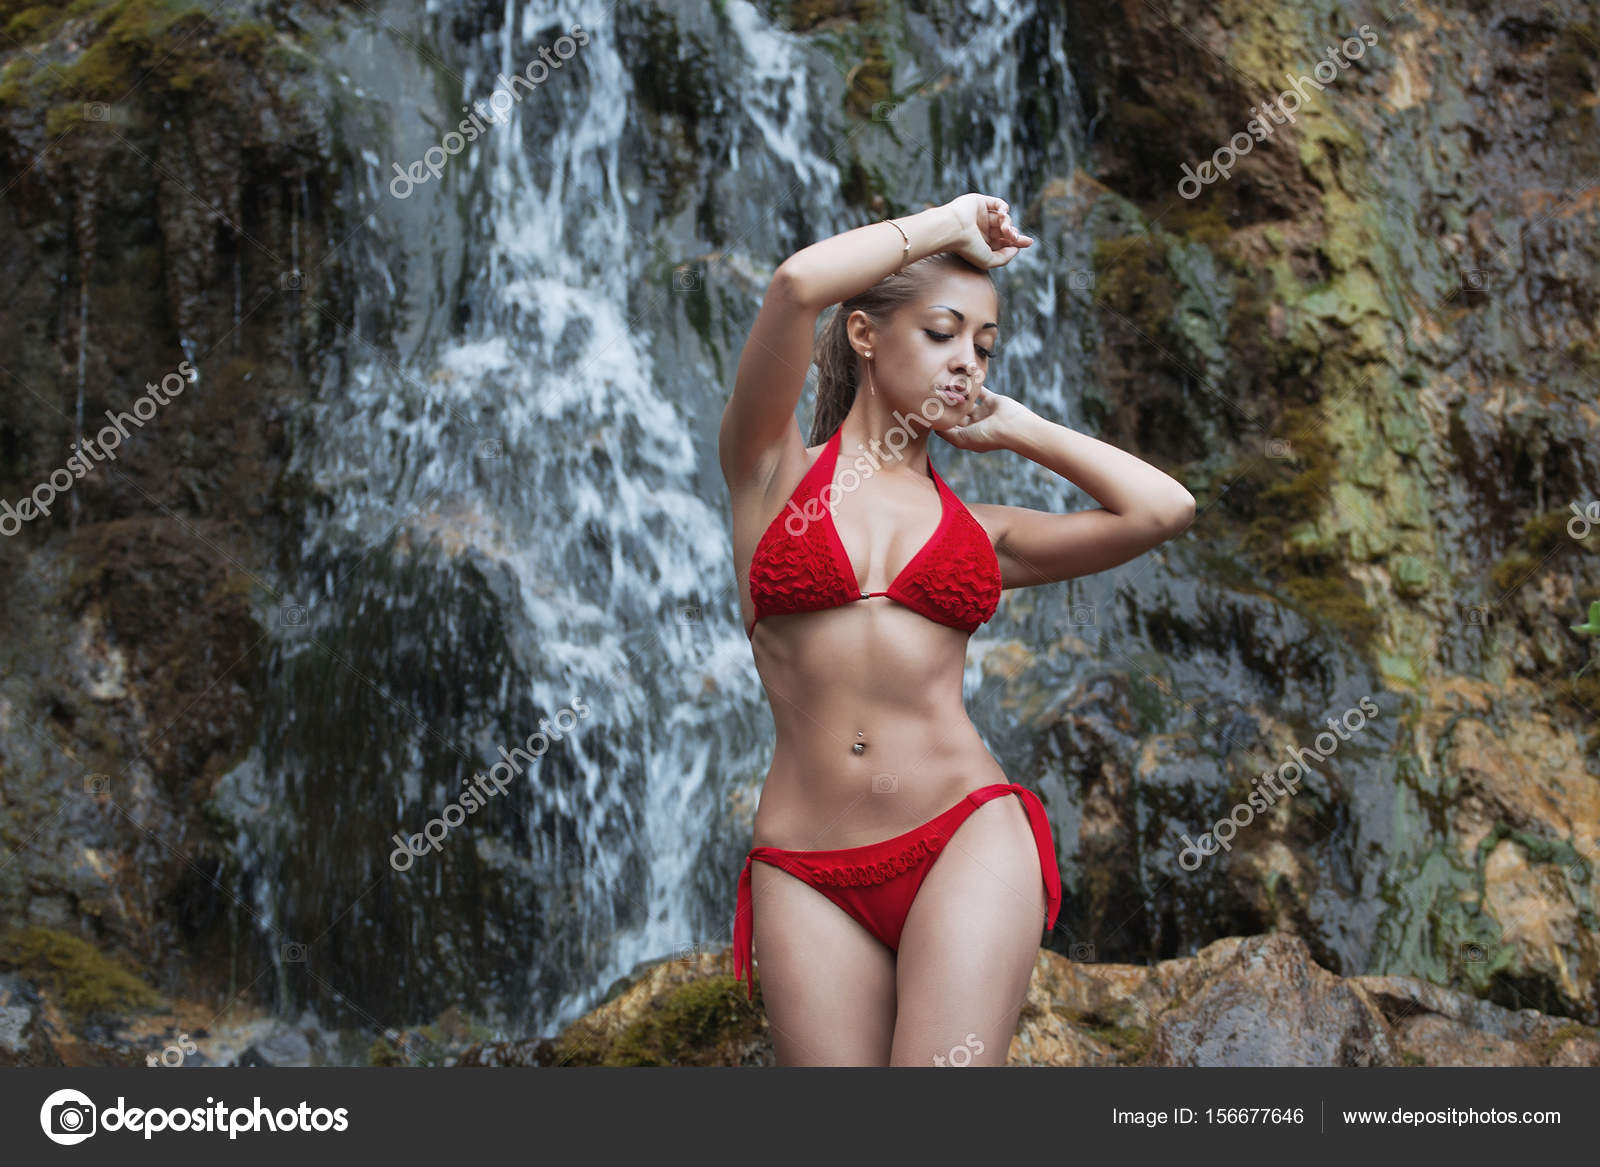 Girl In Swimsuit At The Waterfall Stock Photo 3kstudio 156677646